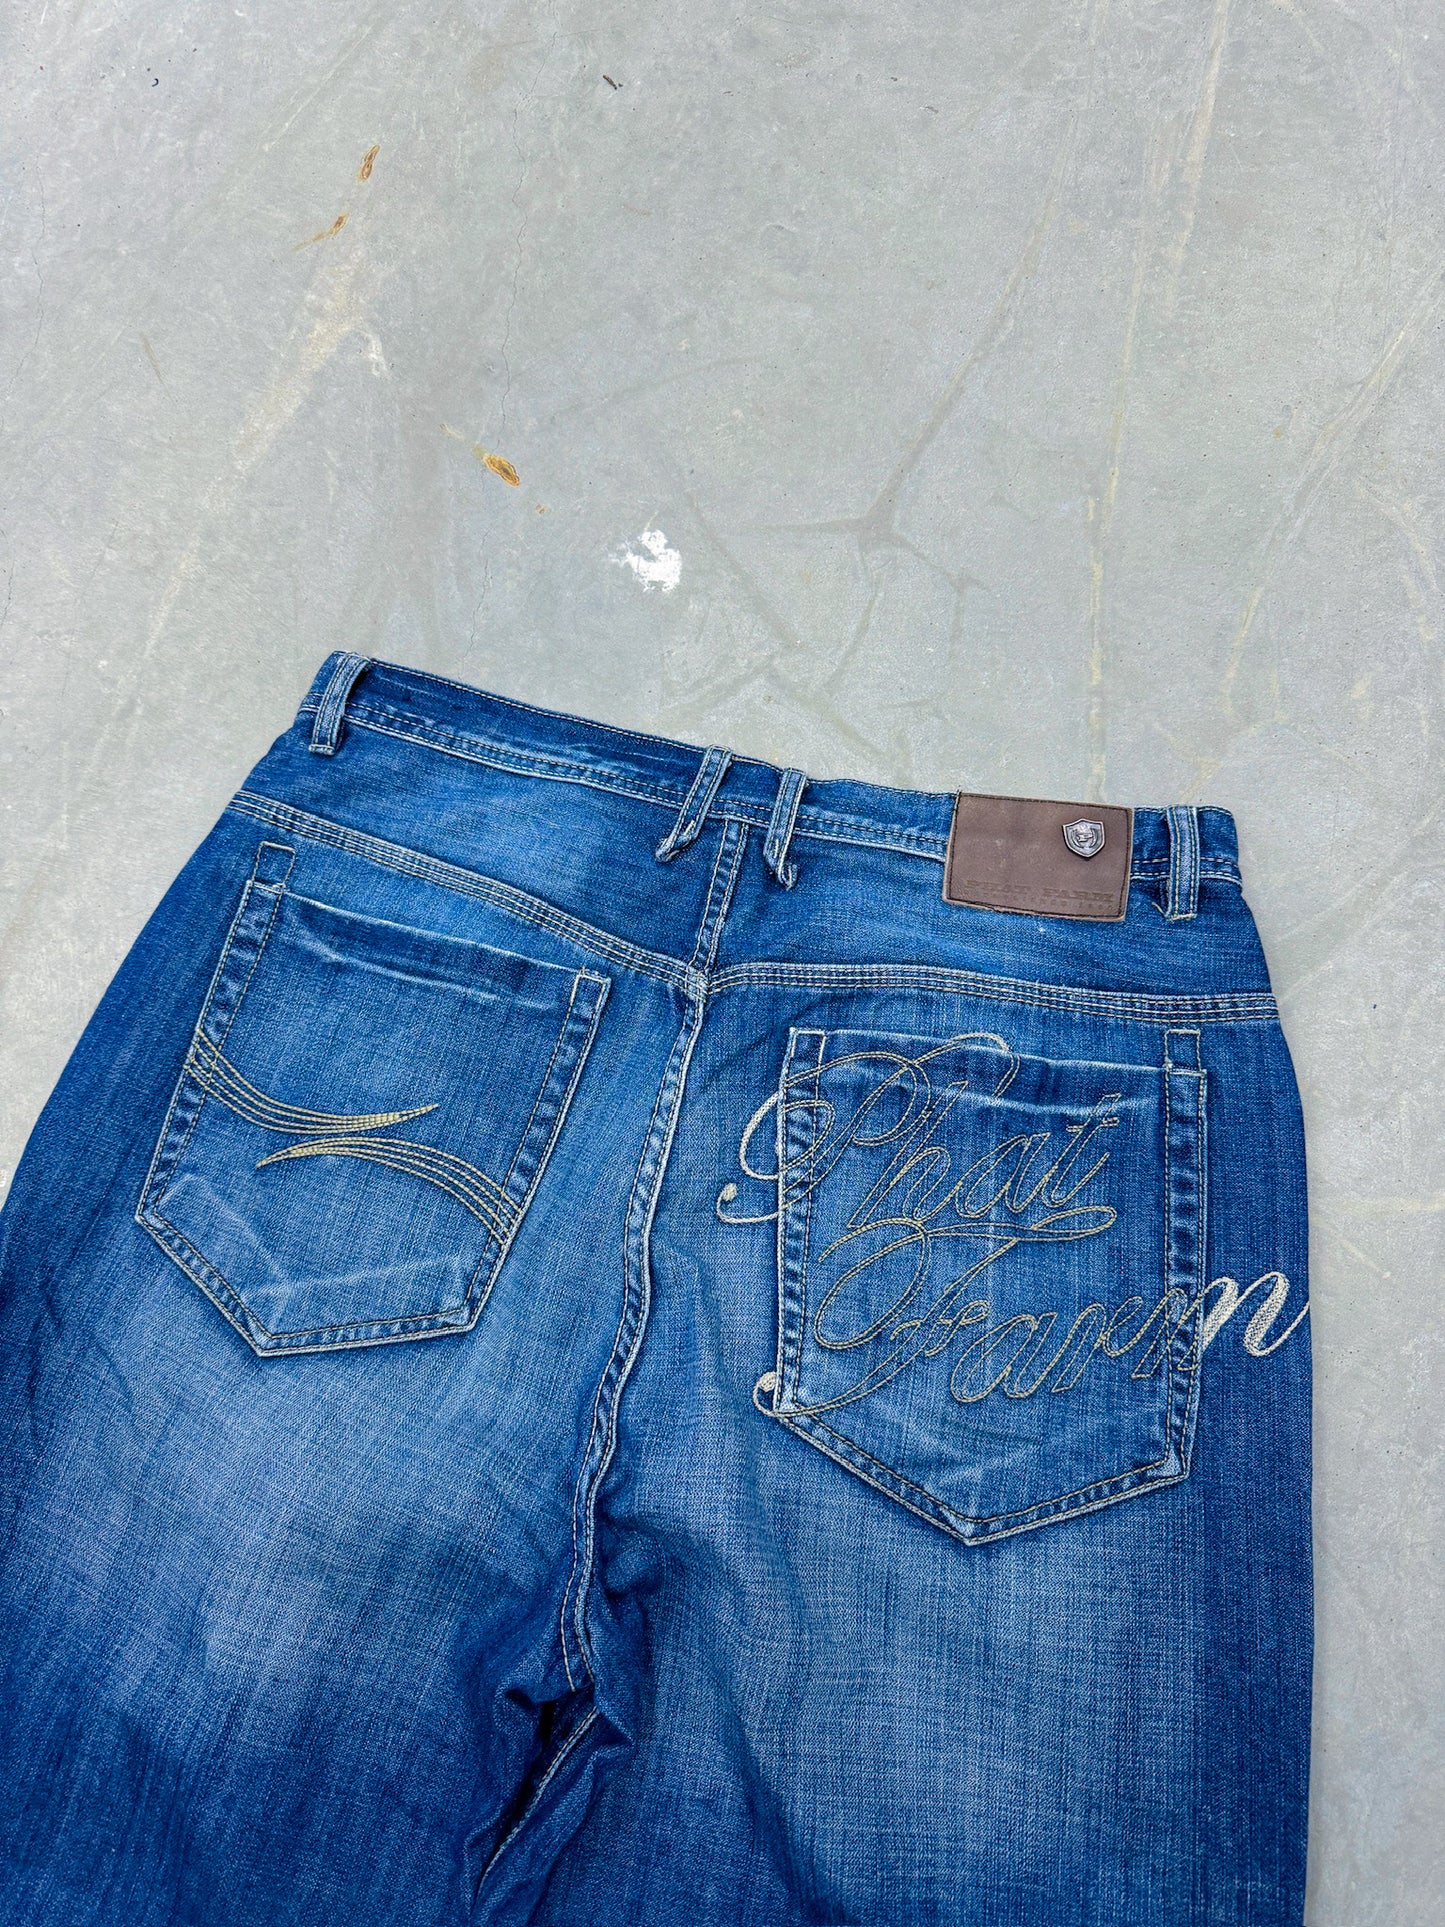 Phat Farm Vintage Jeans | XL